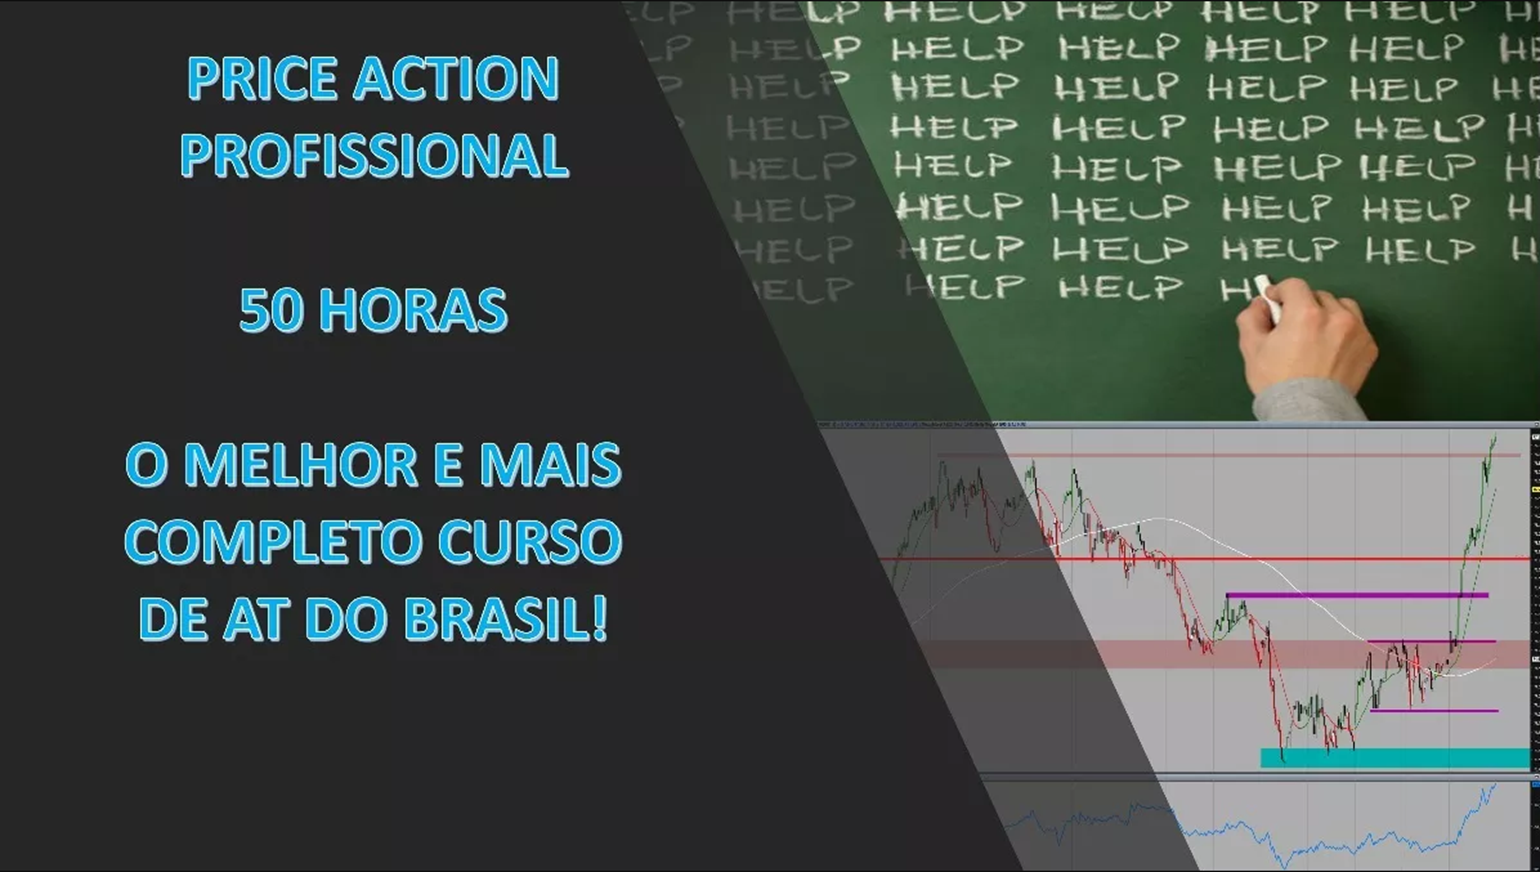 André Machado - Price Action Profissional